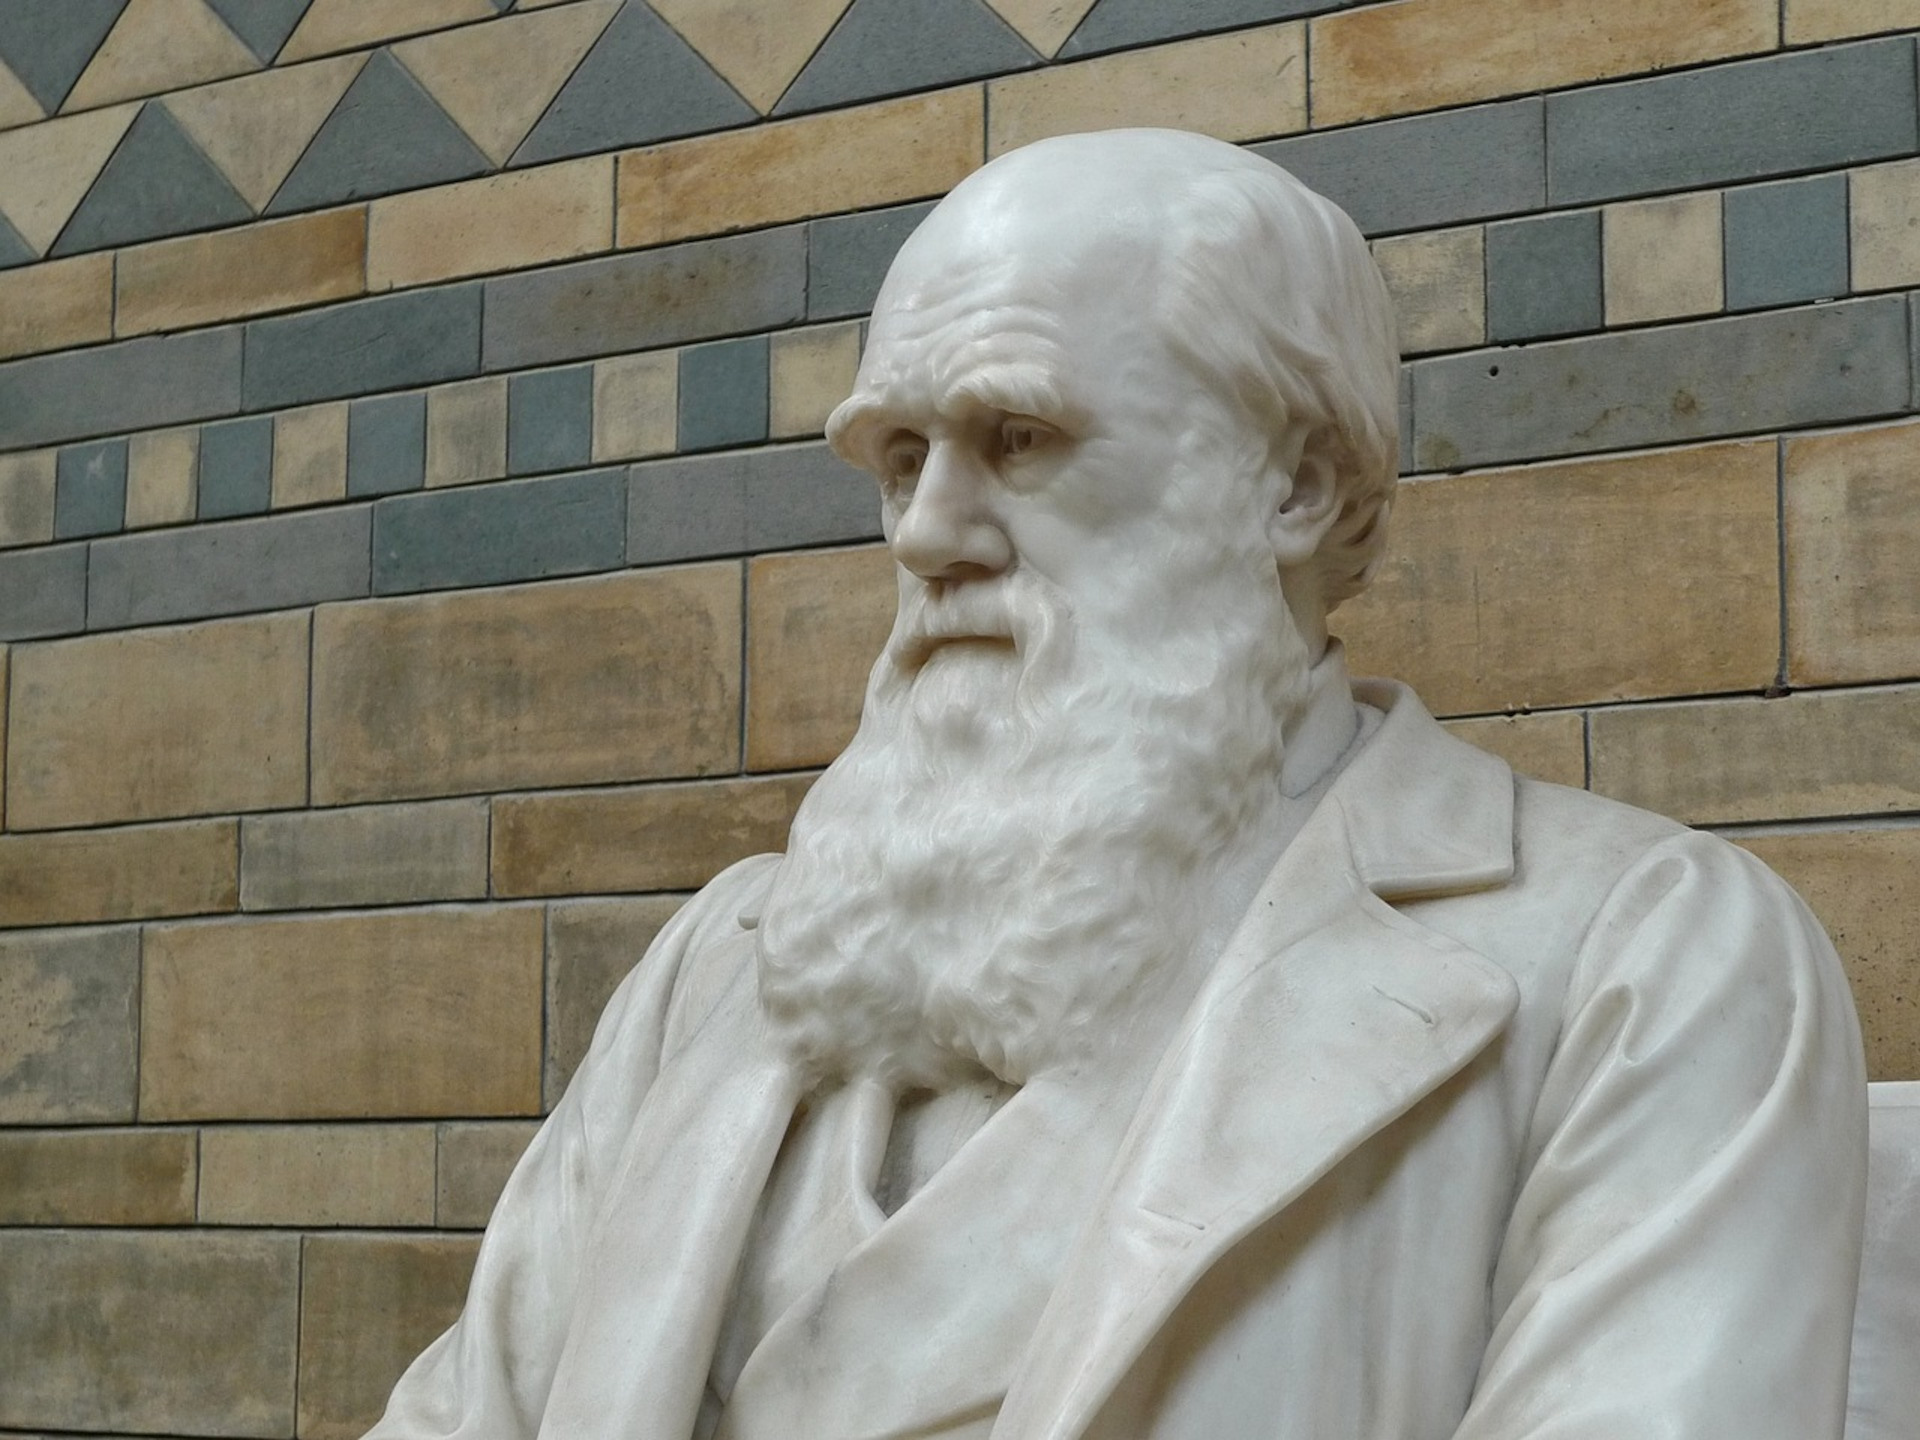 Darwin Day: per celebrare l’eredità duratura di Charles Darwin